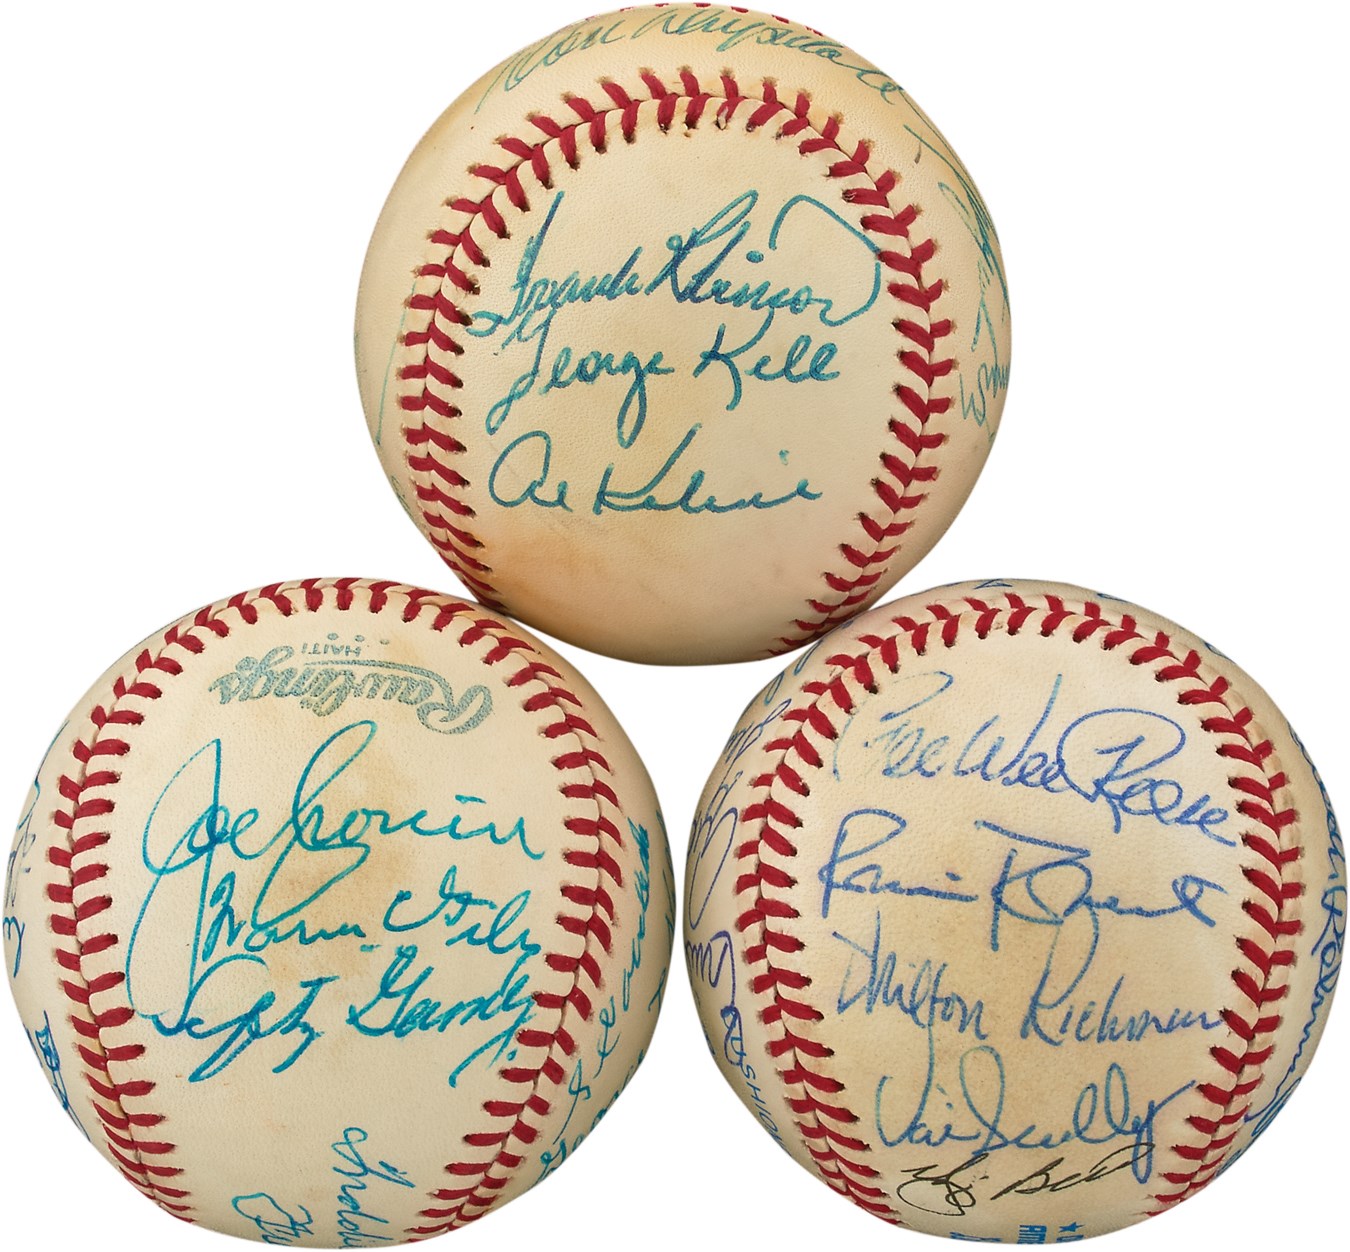 Baseball Autographs - Three Hall of Famers Signed Baseballs